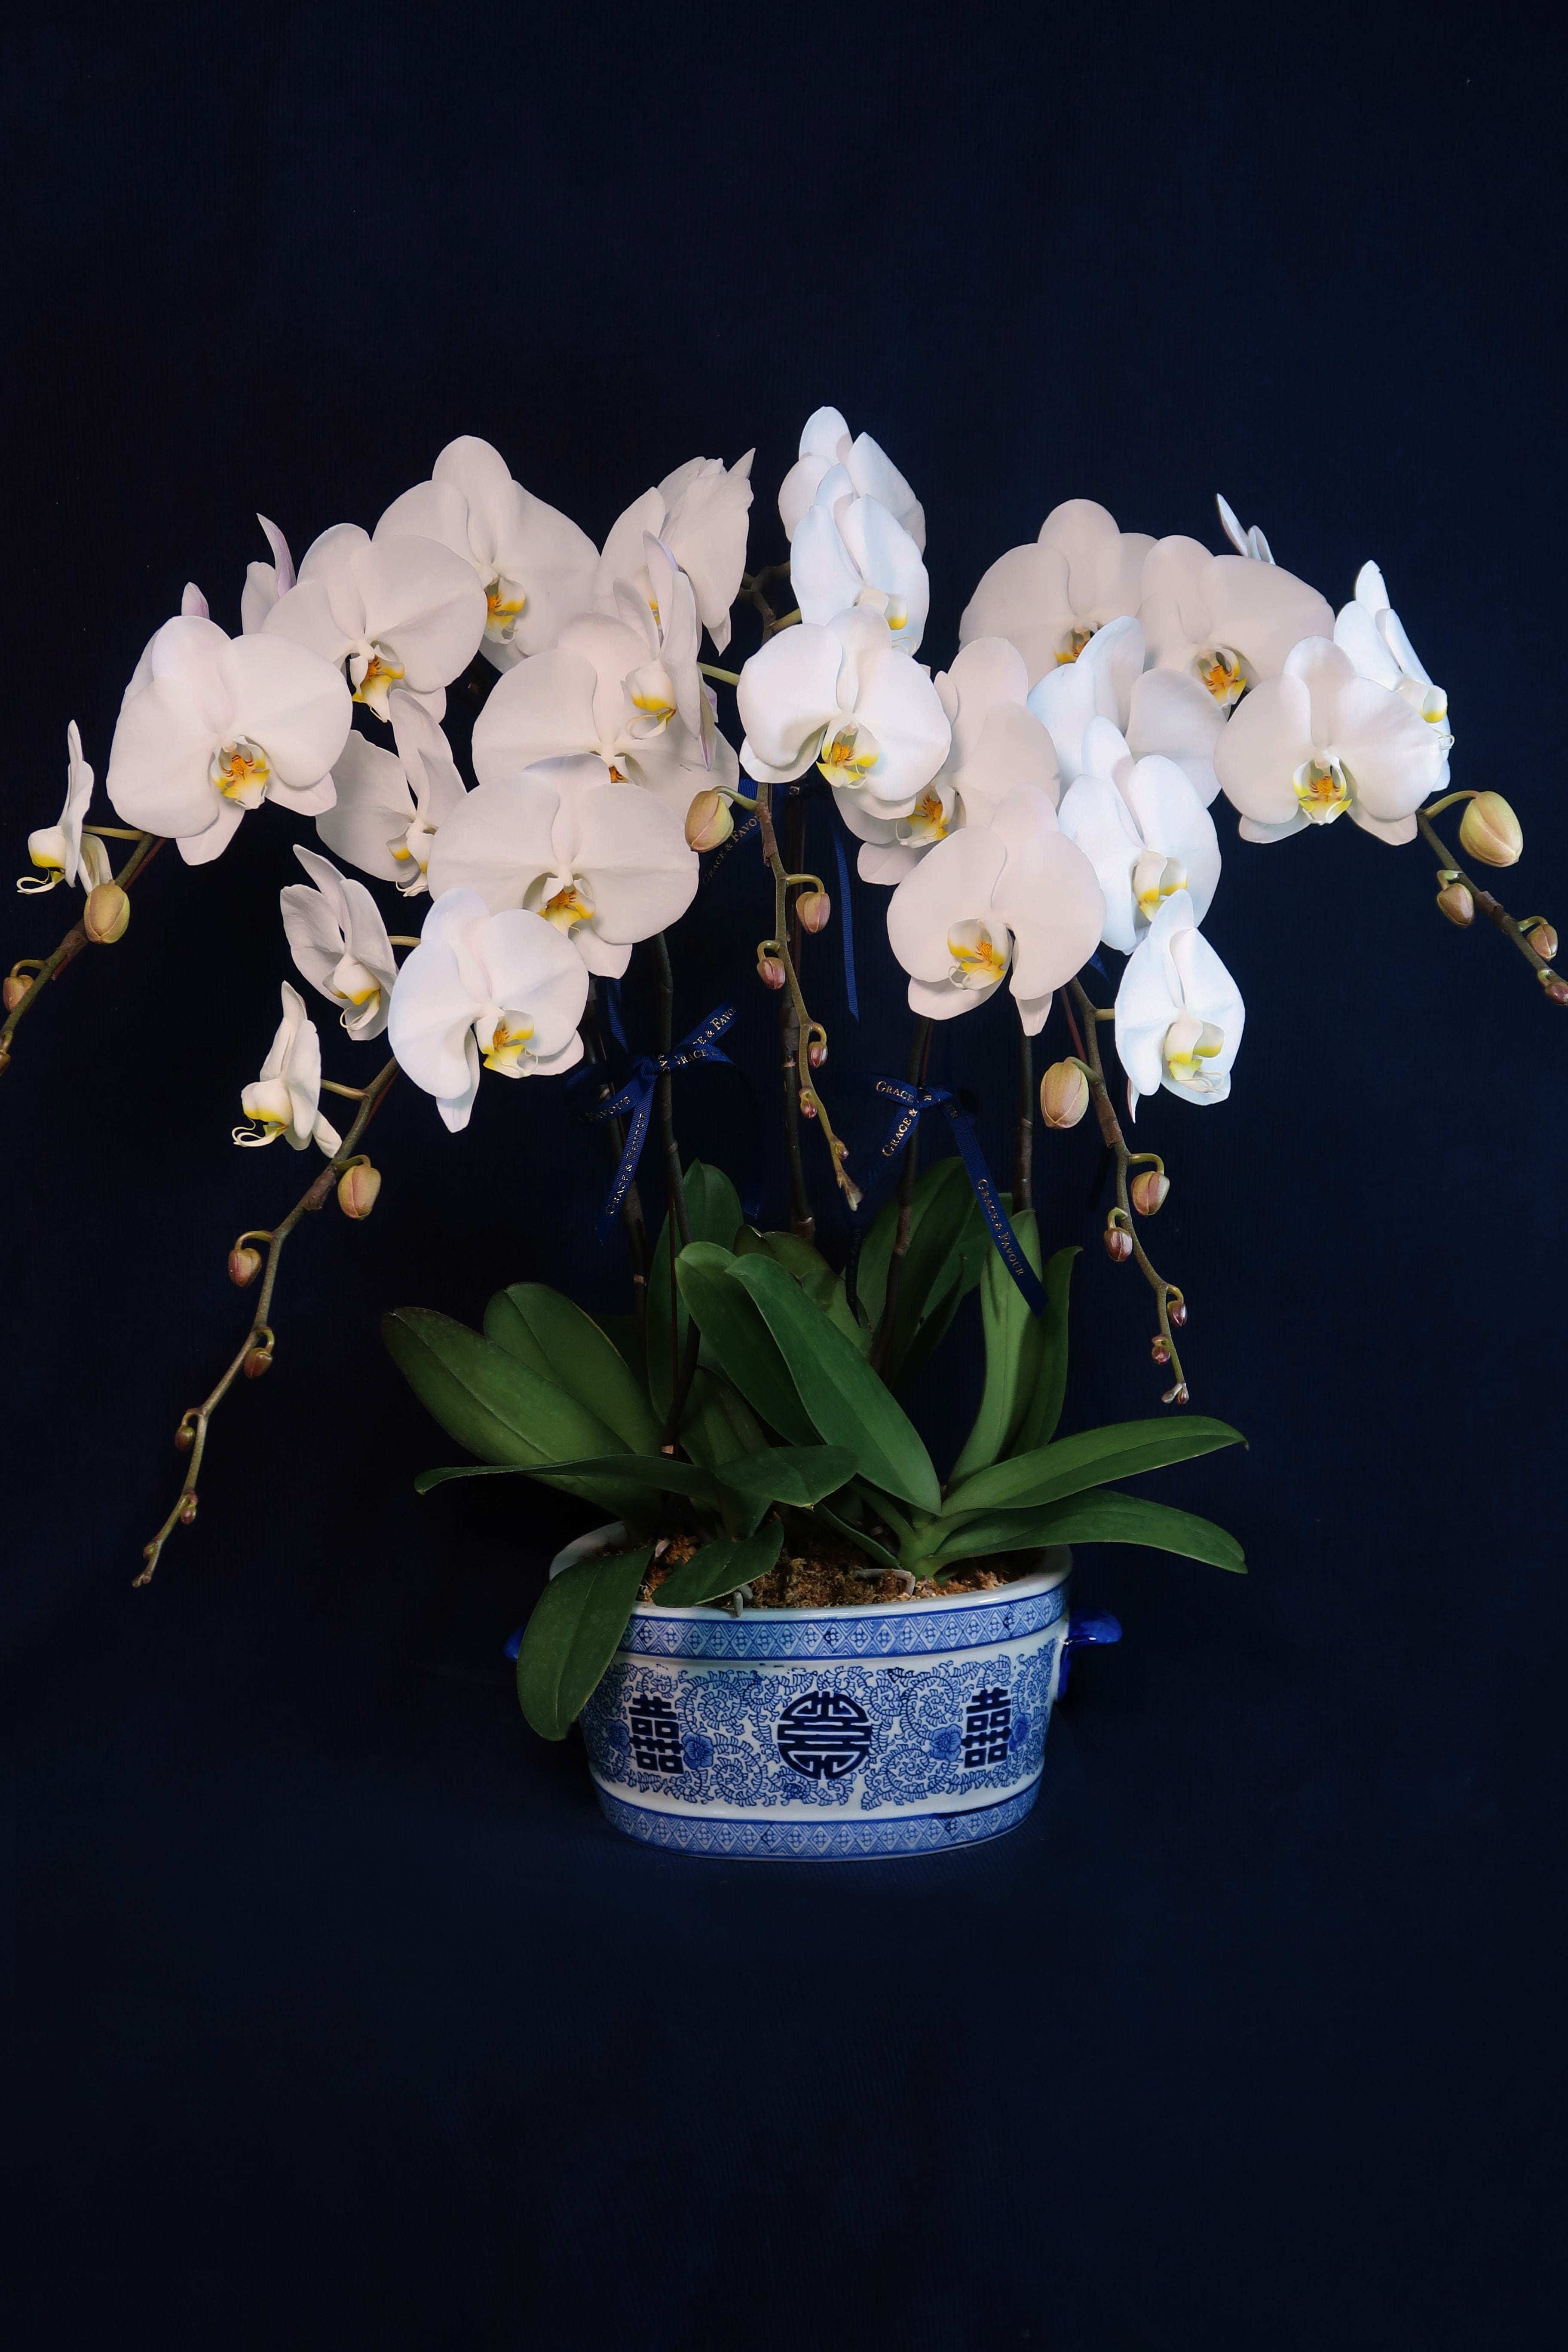 White Phalaenopsis Orchids - Penta